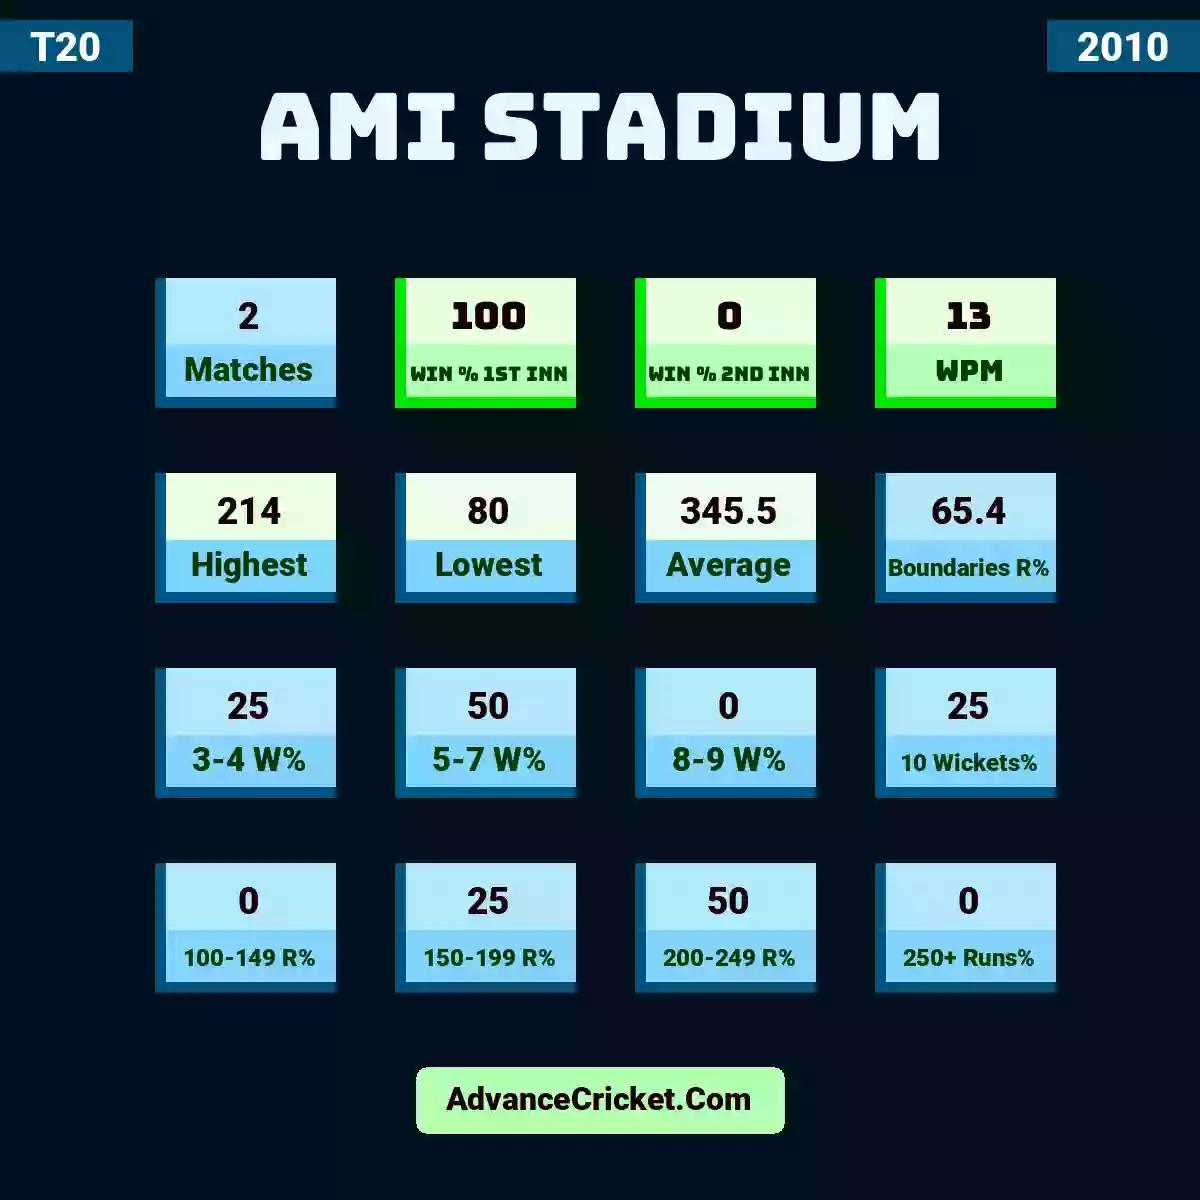 Image showing AMI Stadium with Matches: 2, Win % 1st Inn: 100, Win % 2nd Inn: 0, WPM: 13, Highest: 214, Lowest: 80, Average: 345.5, Boundaries R%: 65.4, 3-4 W%: 25, 5-7 W%: 50, 8-9 W%: 0, 10 Wickets%: 25, 100-149 R%: 0, 150-199 R%: 25, 200-249 R%: 50, 250+ Runs%: 0.